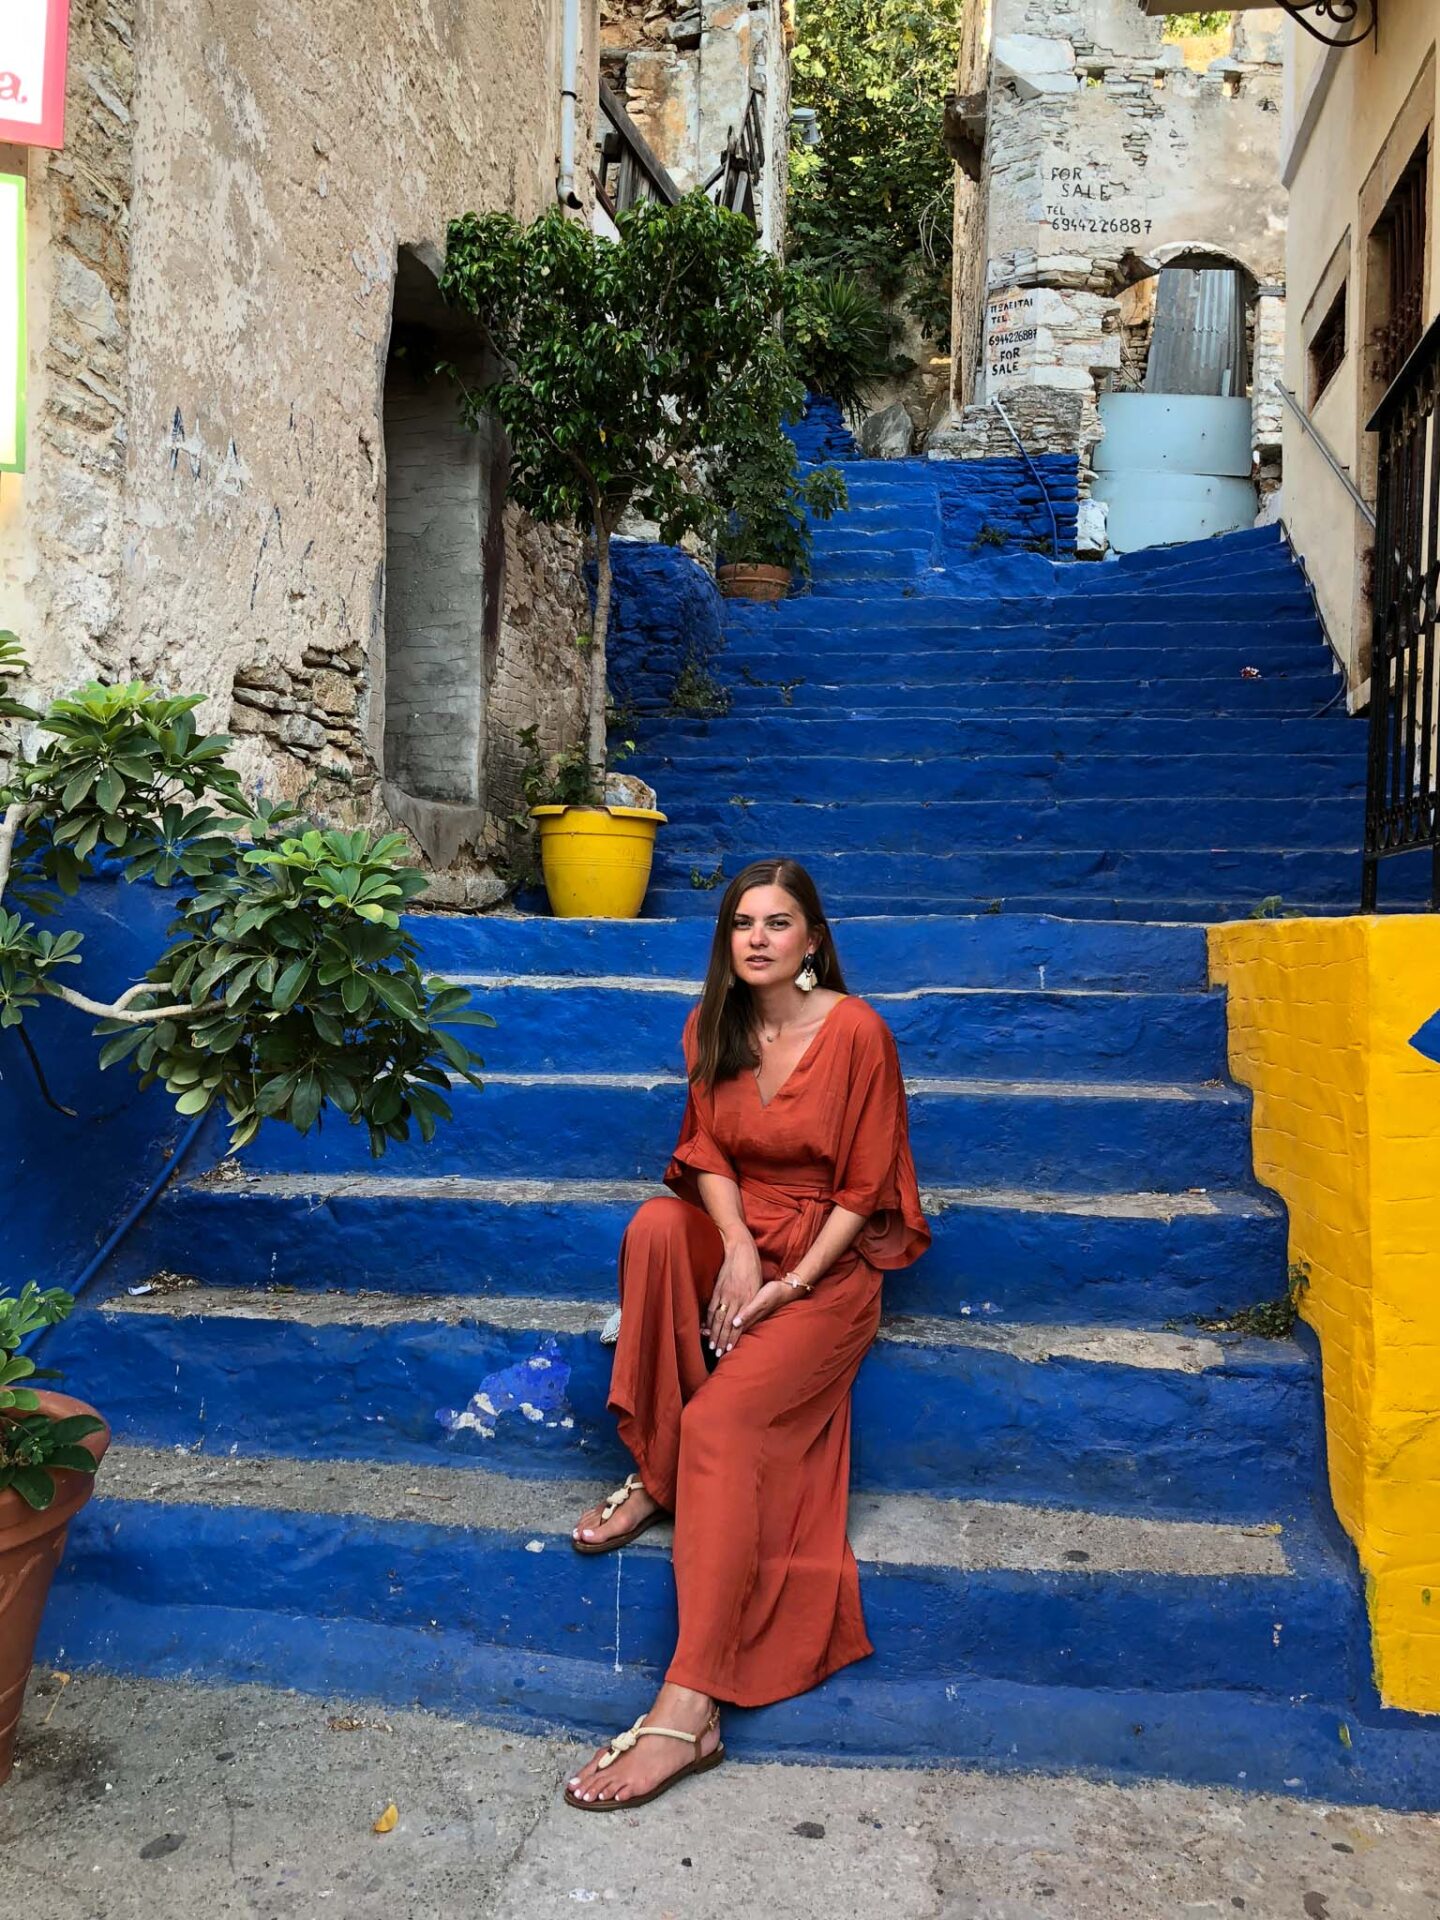 Symi Greece blue steps